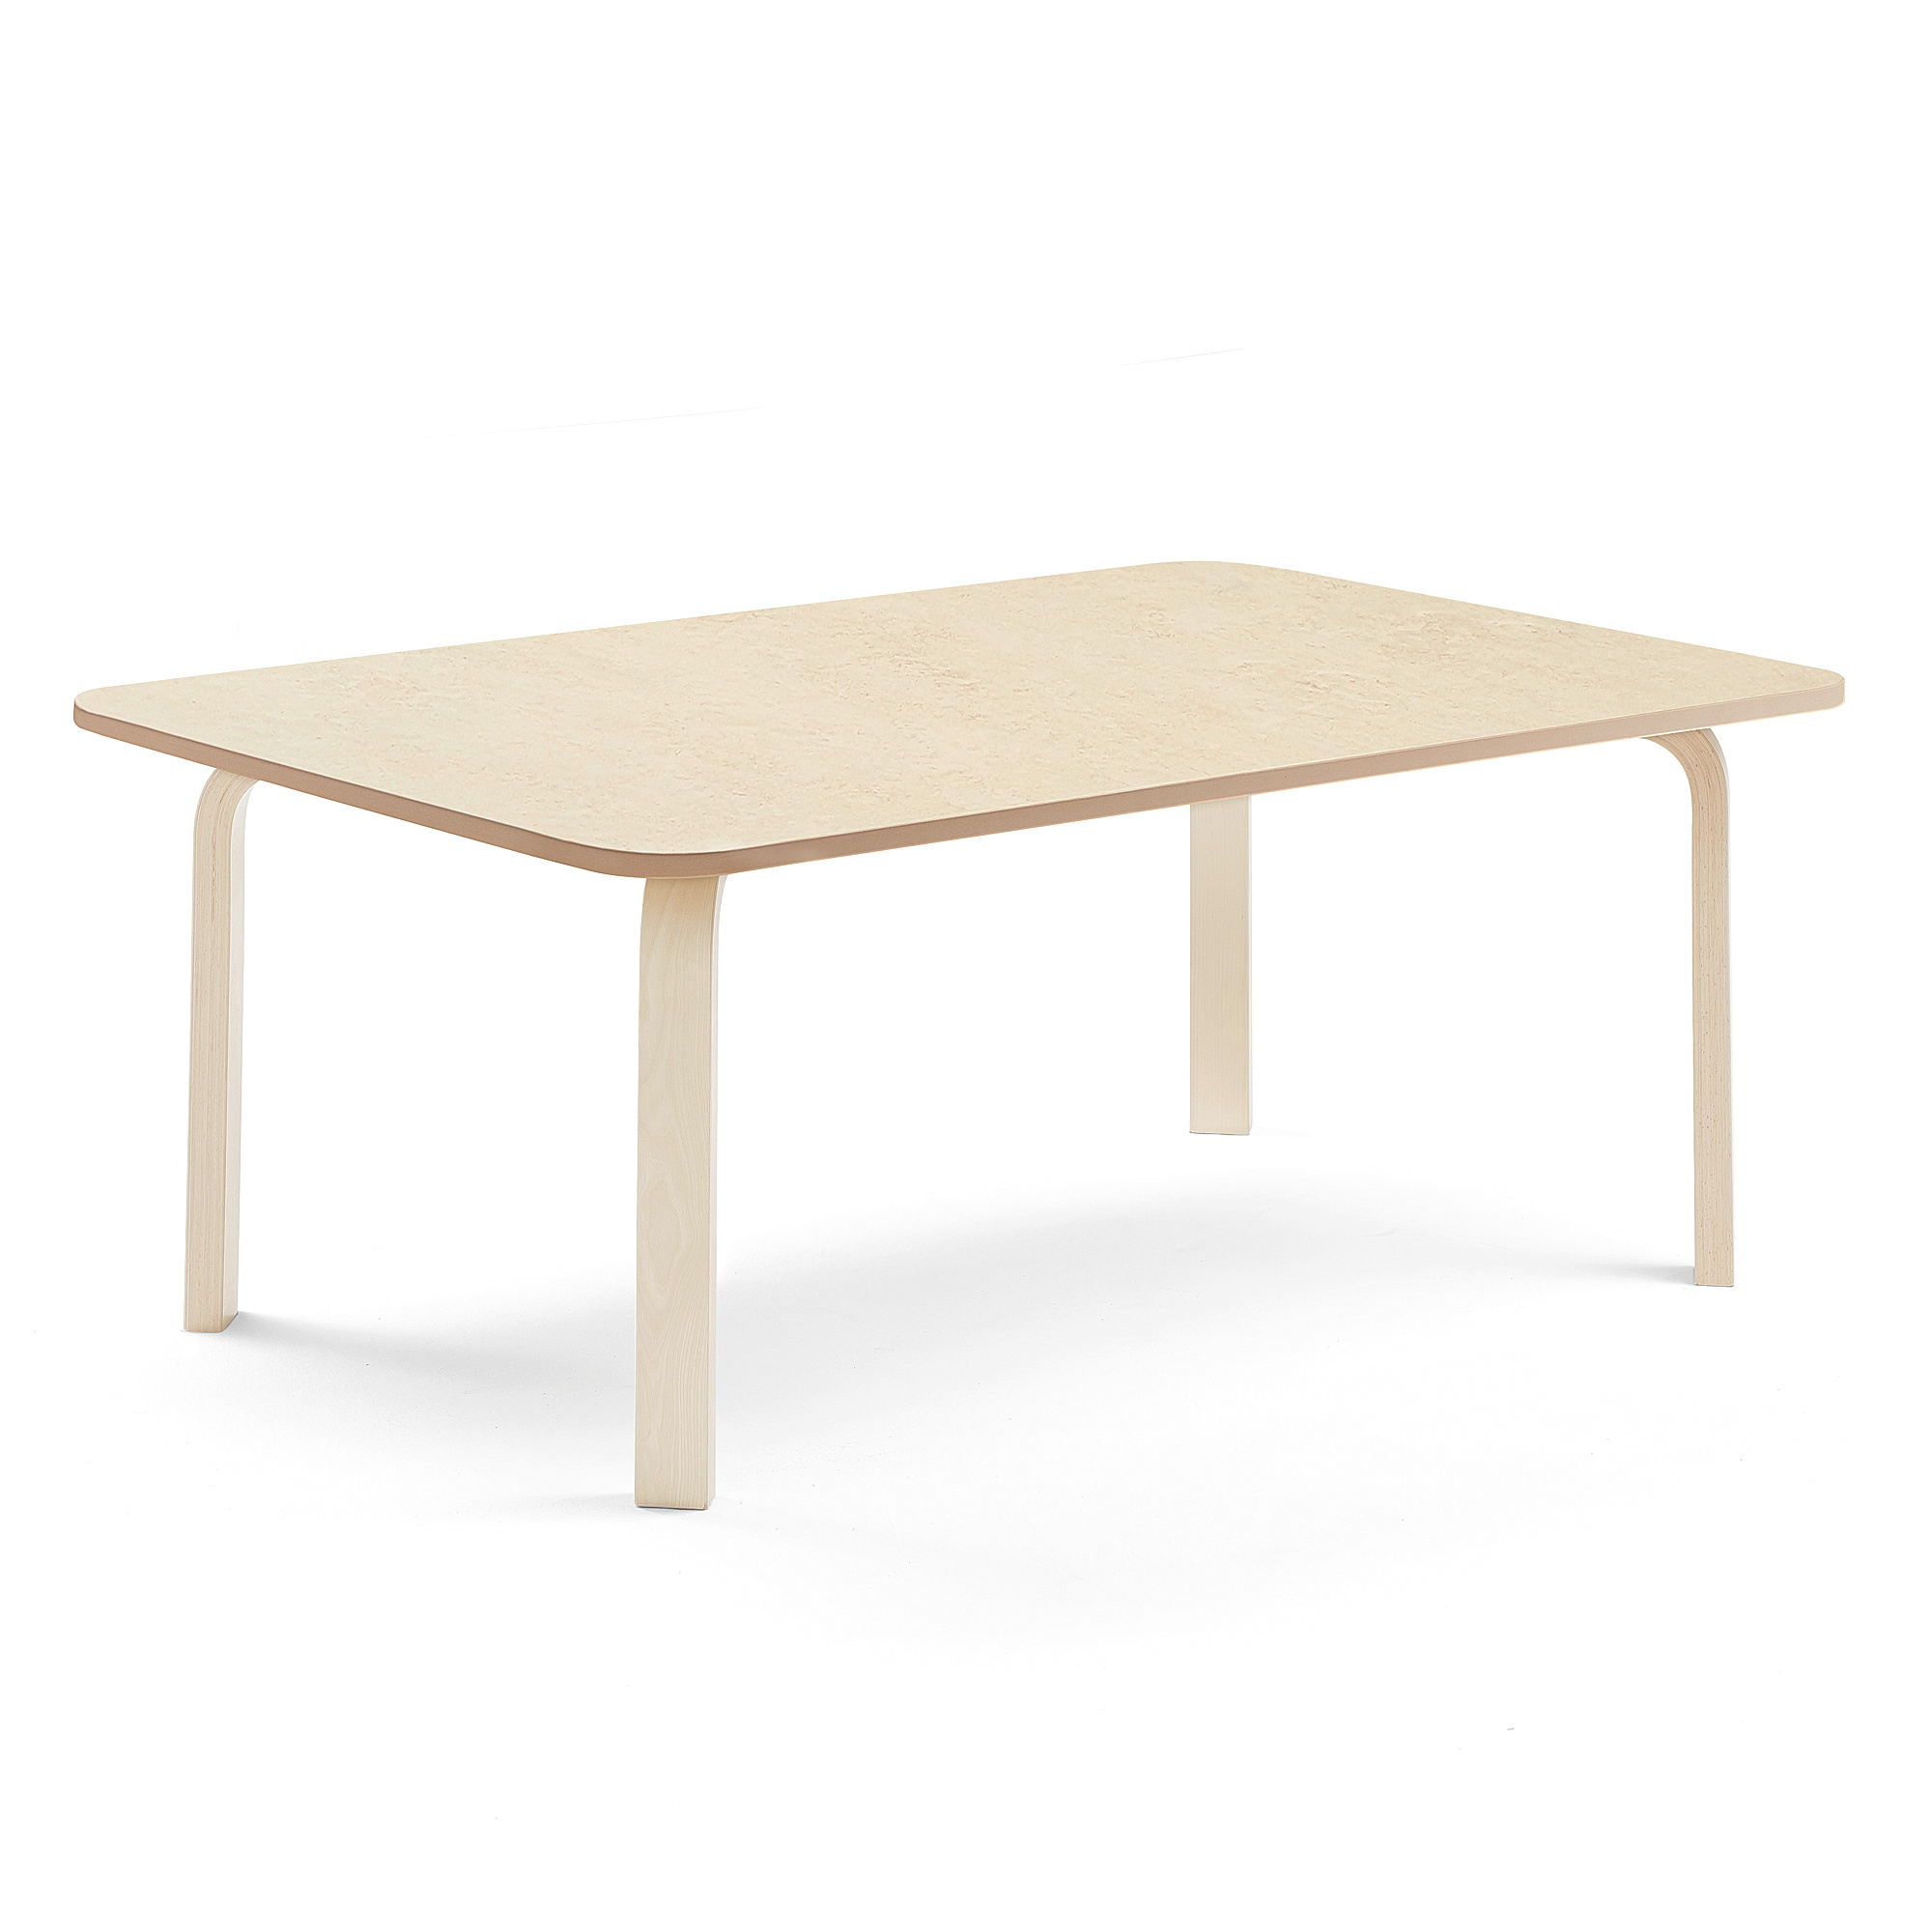 Stůl ELTON, 1800x700x530 mm, bříza, akustické linoleum, béžová